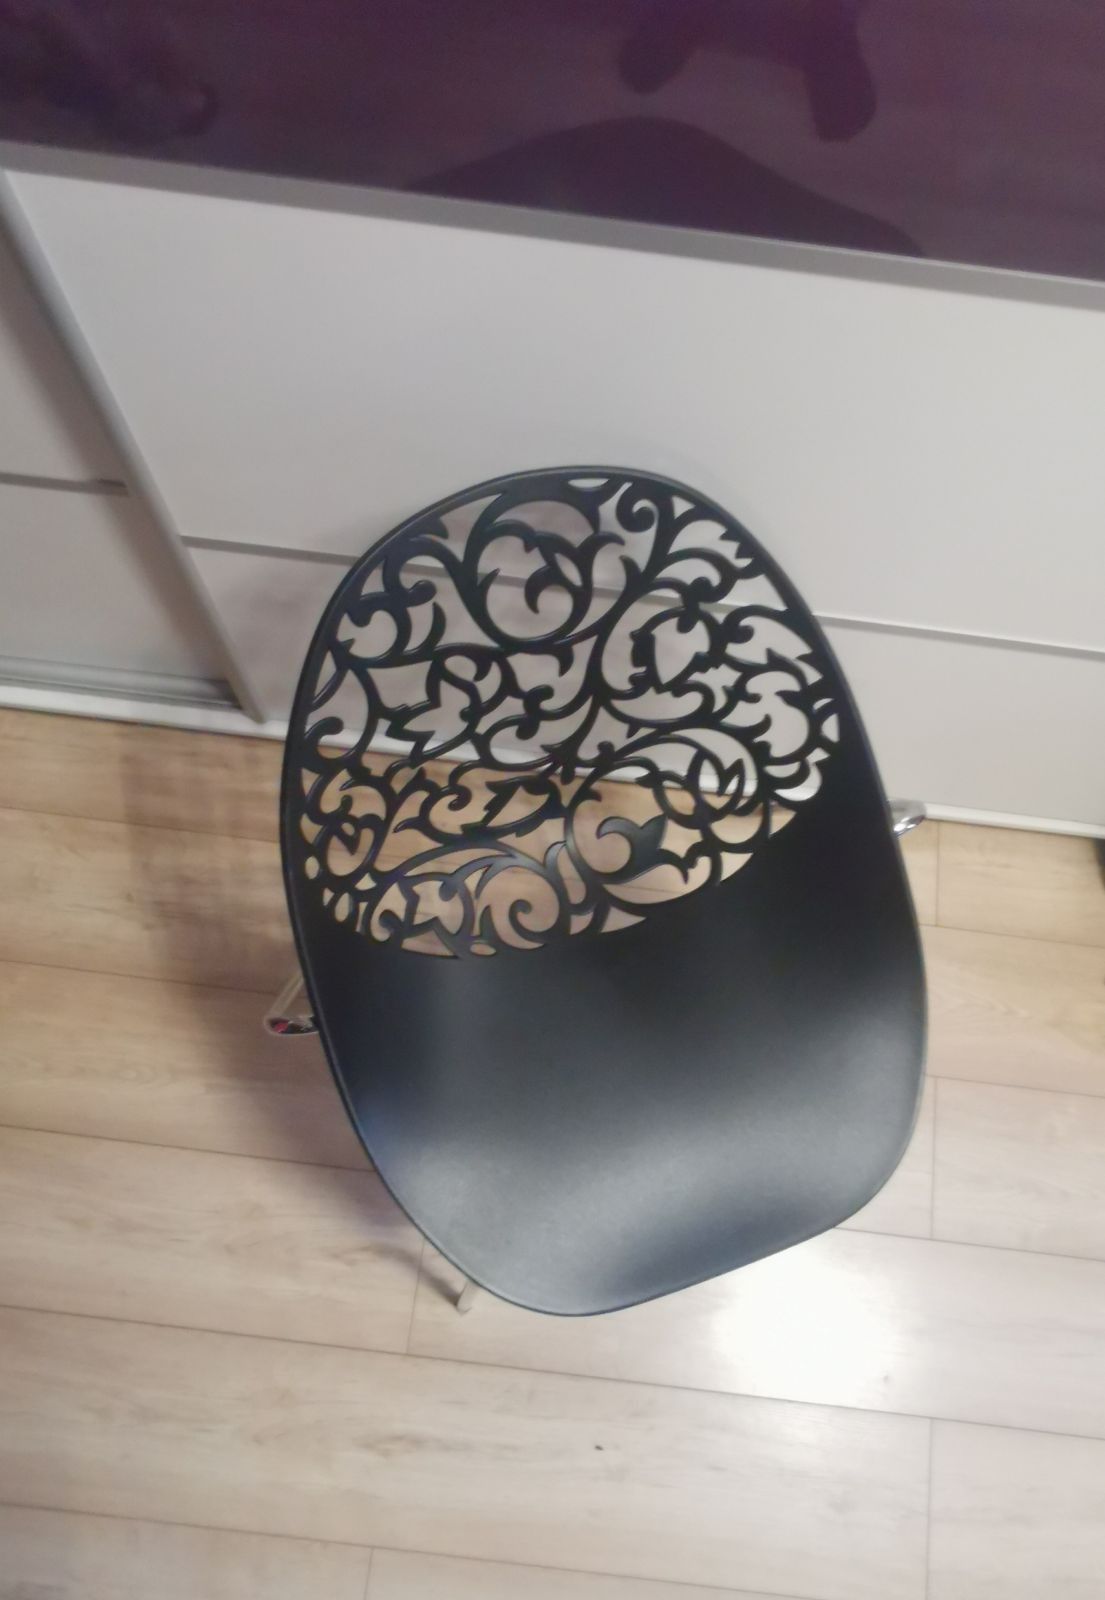 Krzesla azurowe glamur